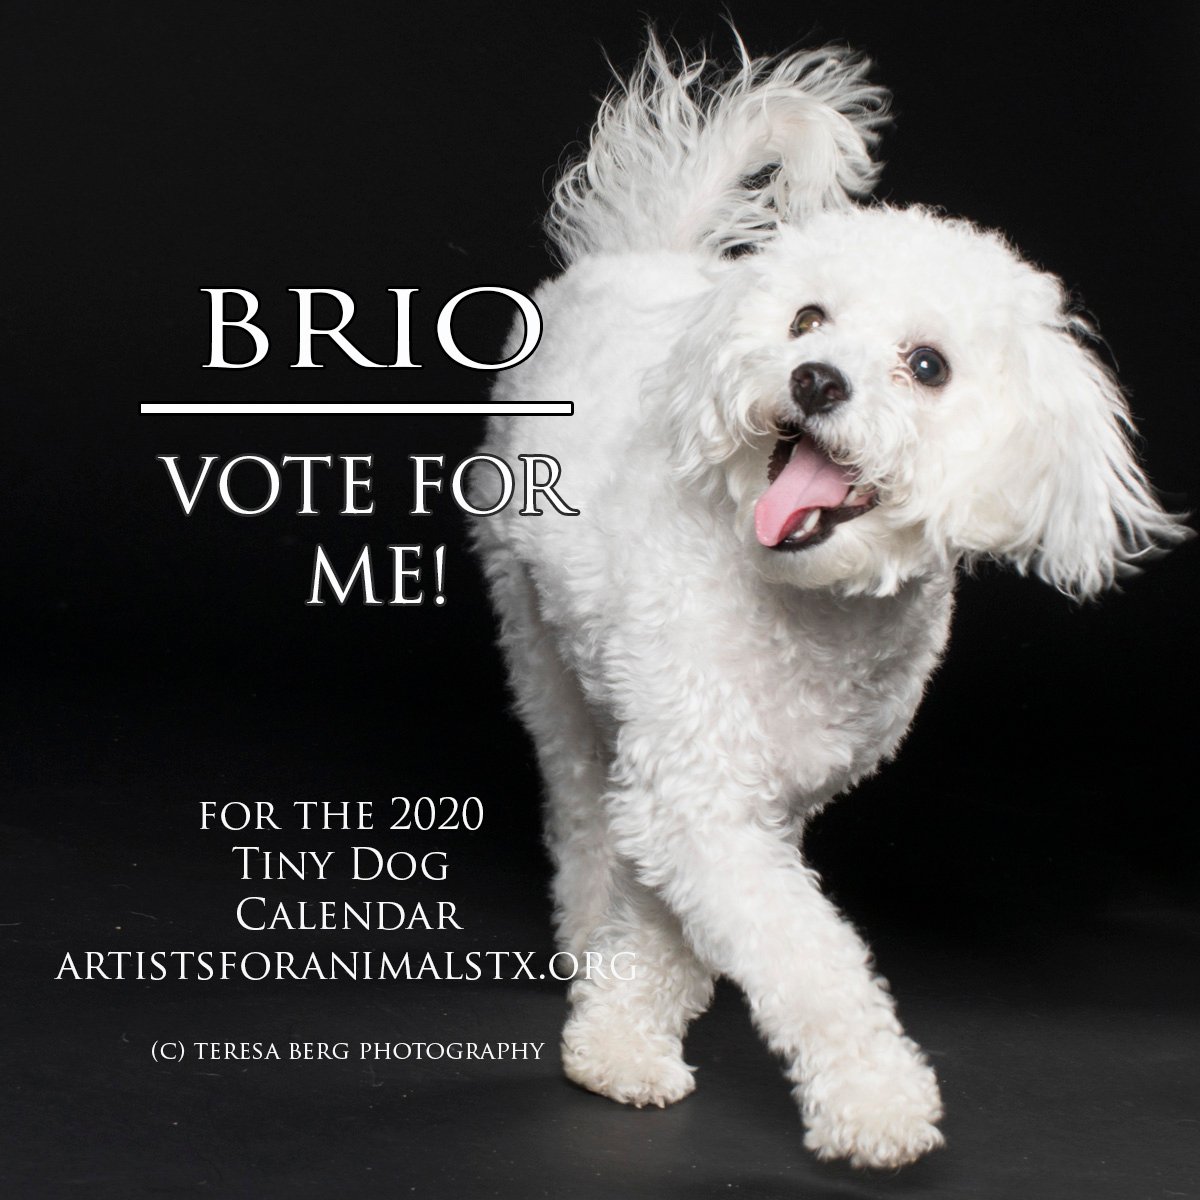 The 2020 Tiny Dog Calendar Contest is Live! Teresa Berg Photography